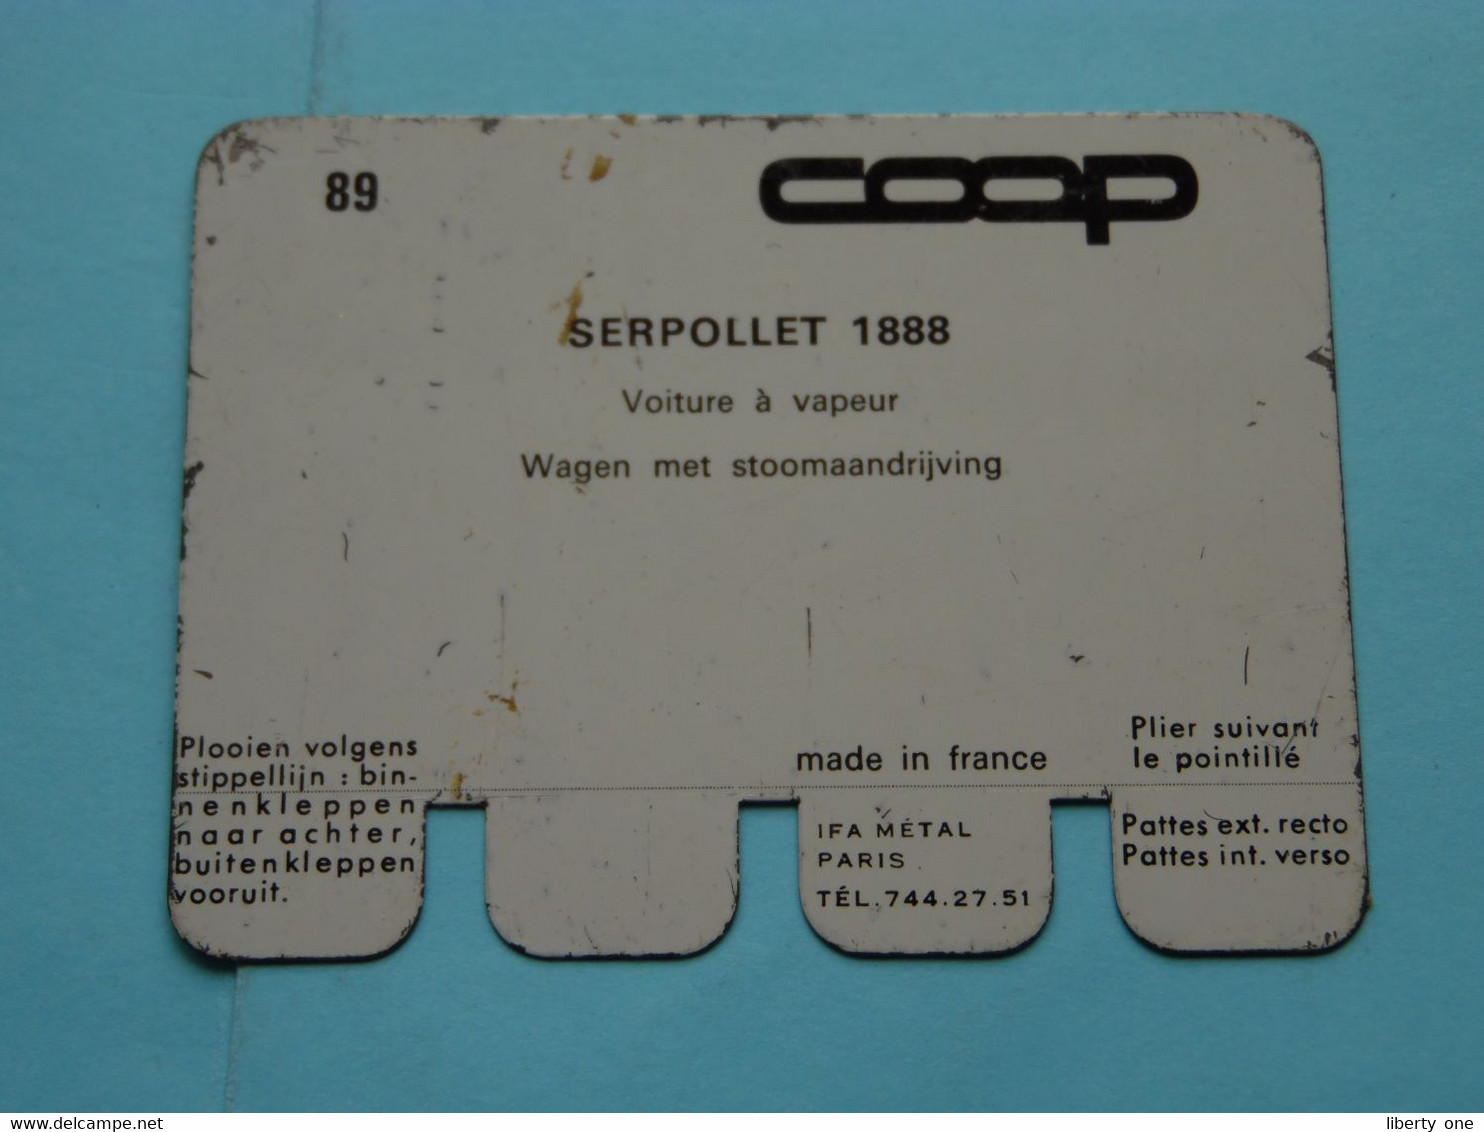 SERPOLLET 1888 - Coll. N° 89 NL/FR ( Plaquette C O O P - Voir Photo - IFA Metal Paris ) ! - Tin Signs (after1960)